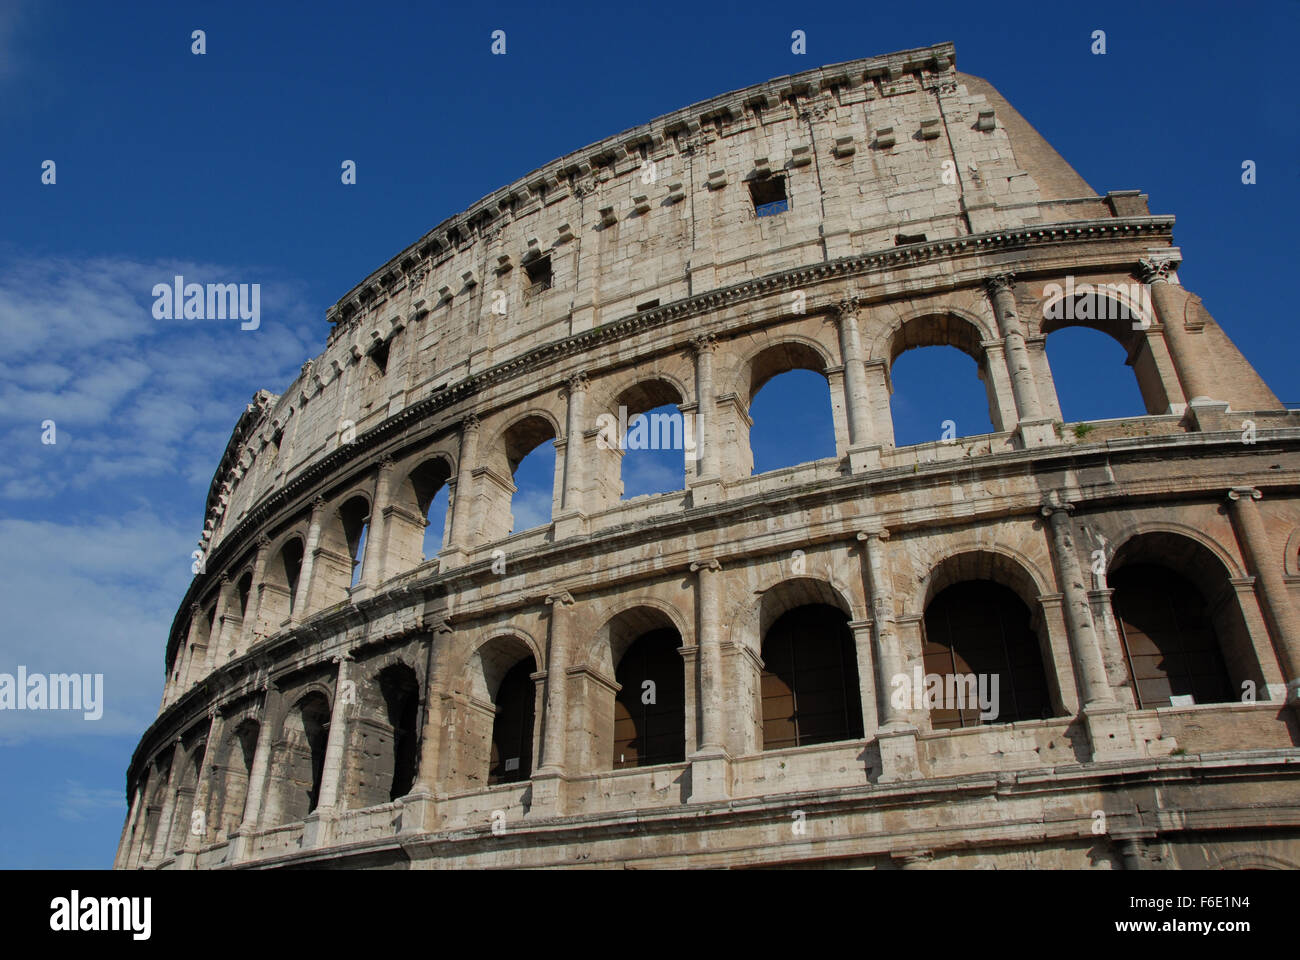 Coliseum, the most famous landmark of Rome Stock Photo